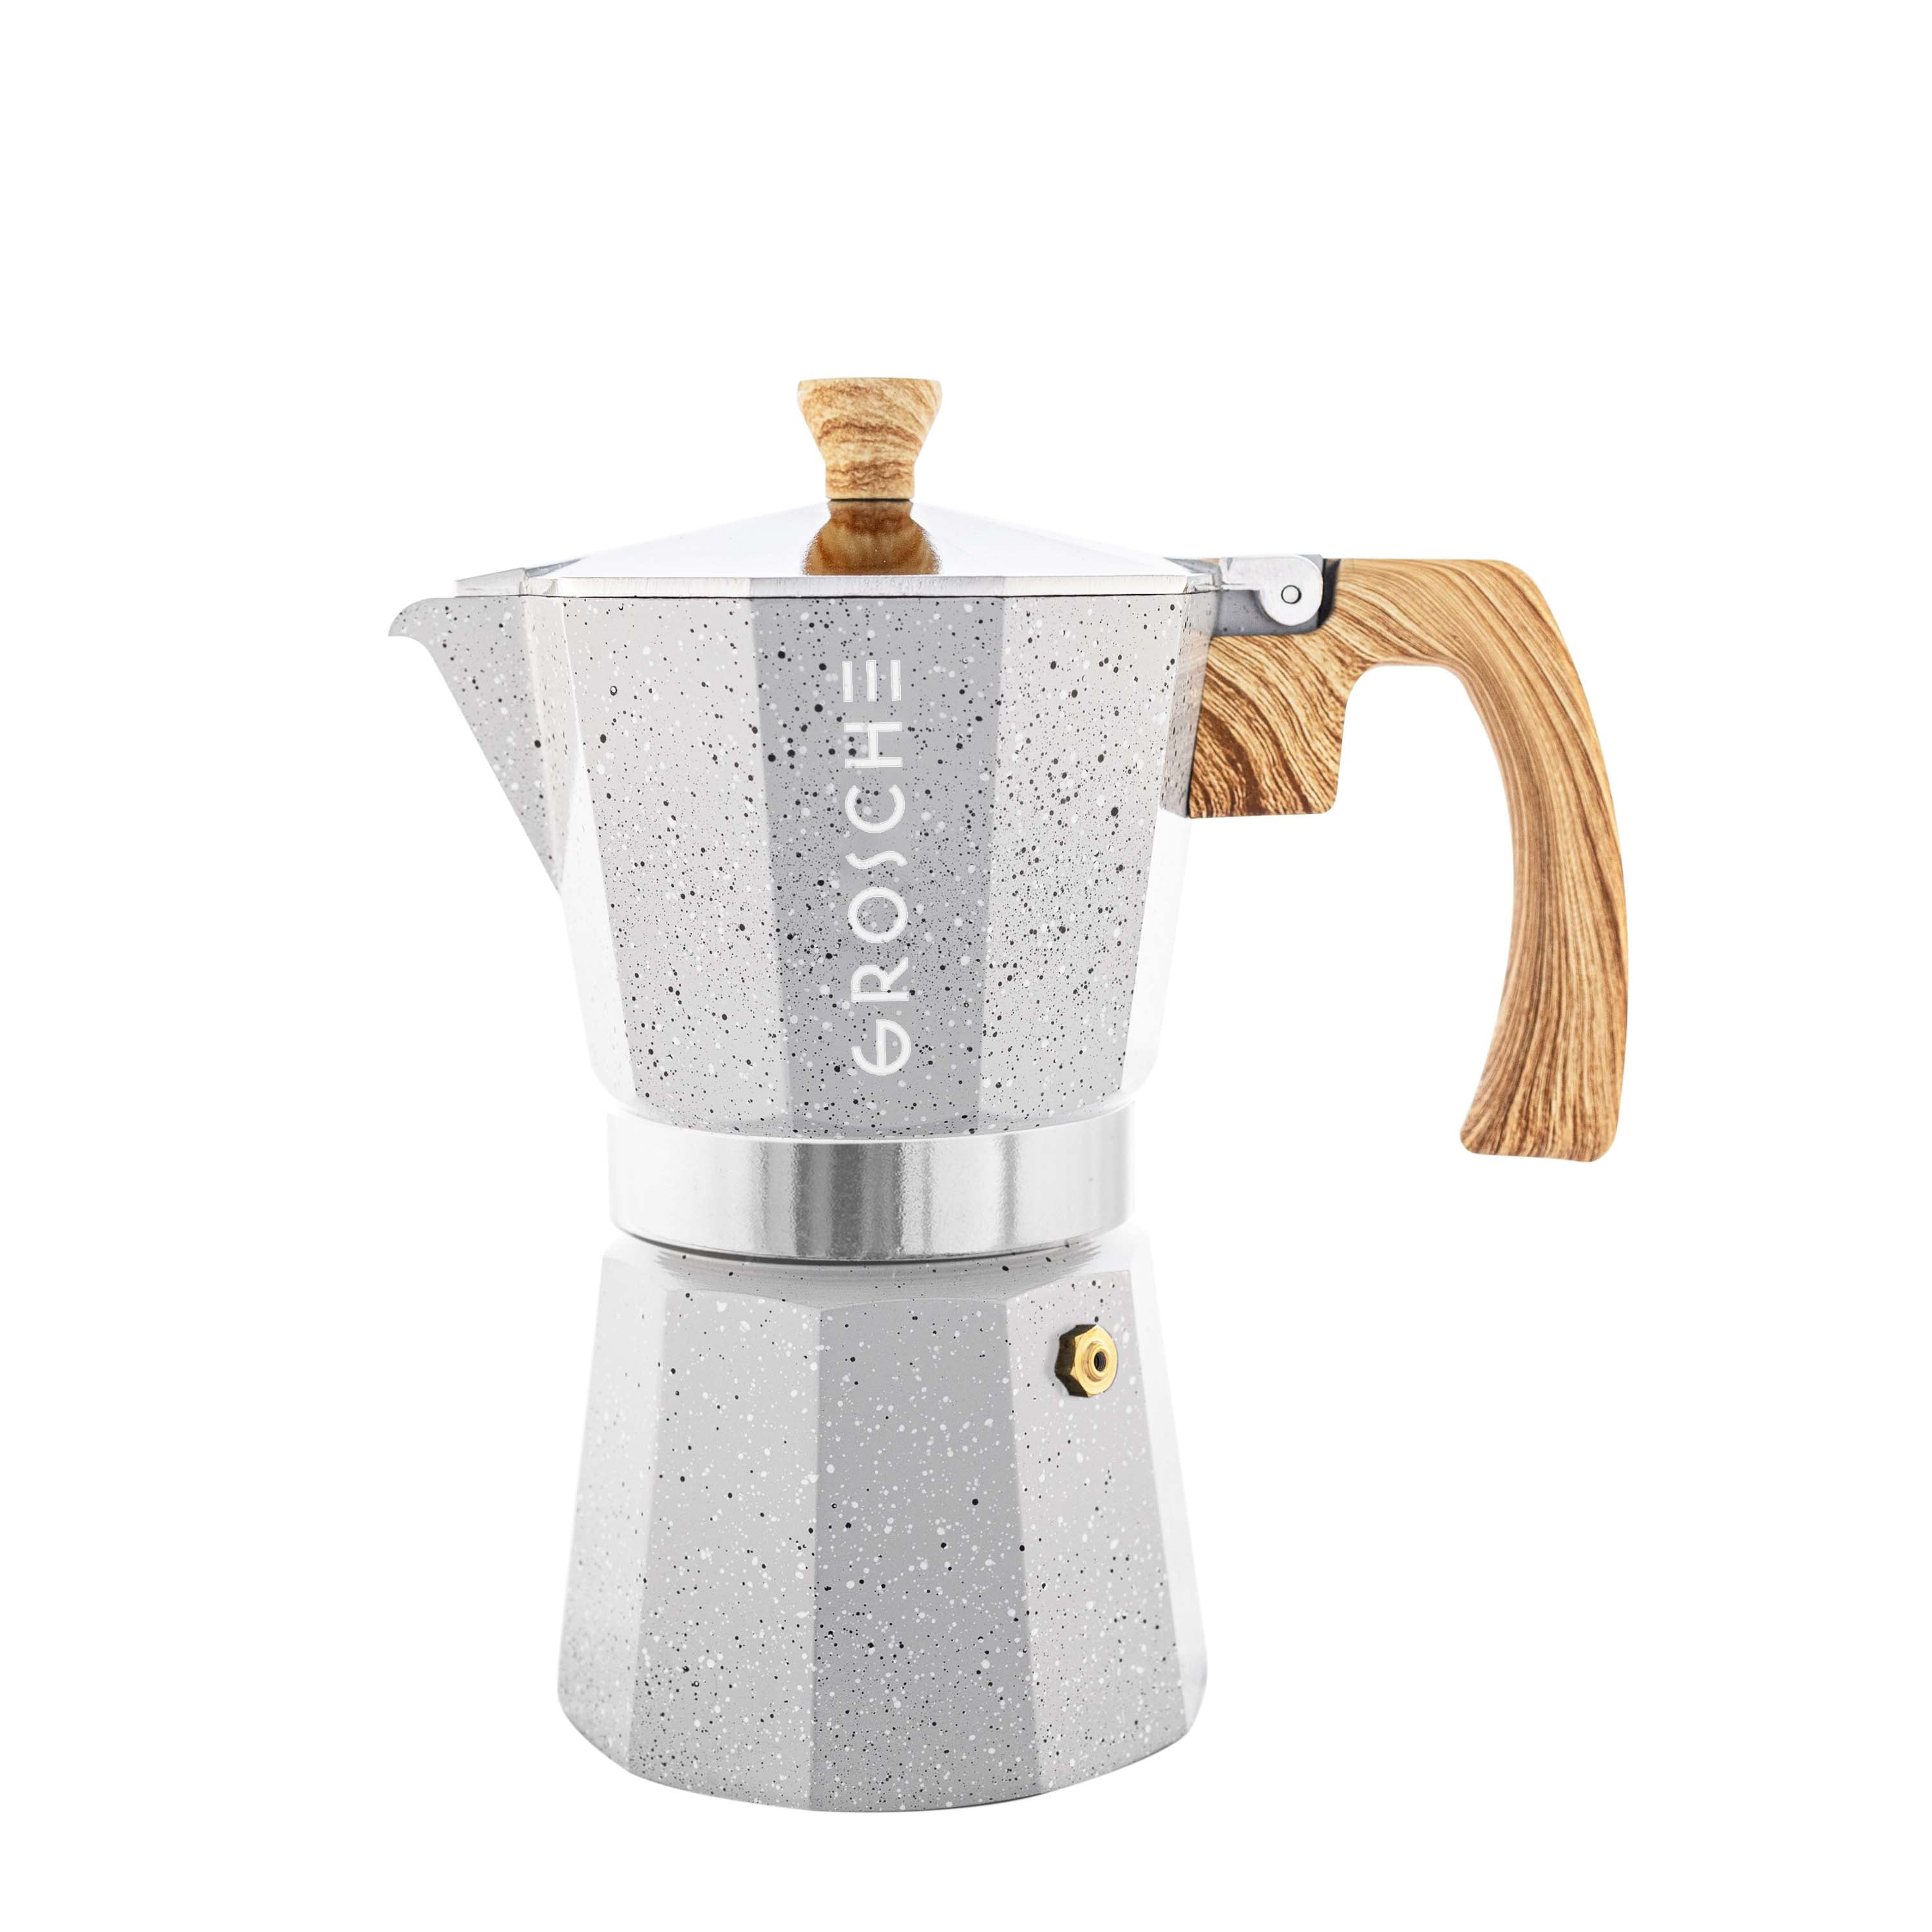 GROSCHE Charcoal Milano Stovetop Espresso Maker, 6 cup